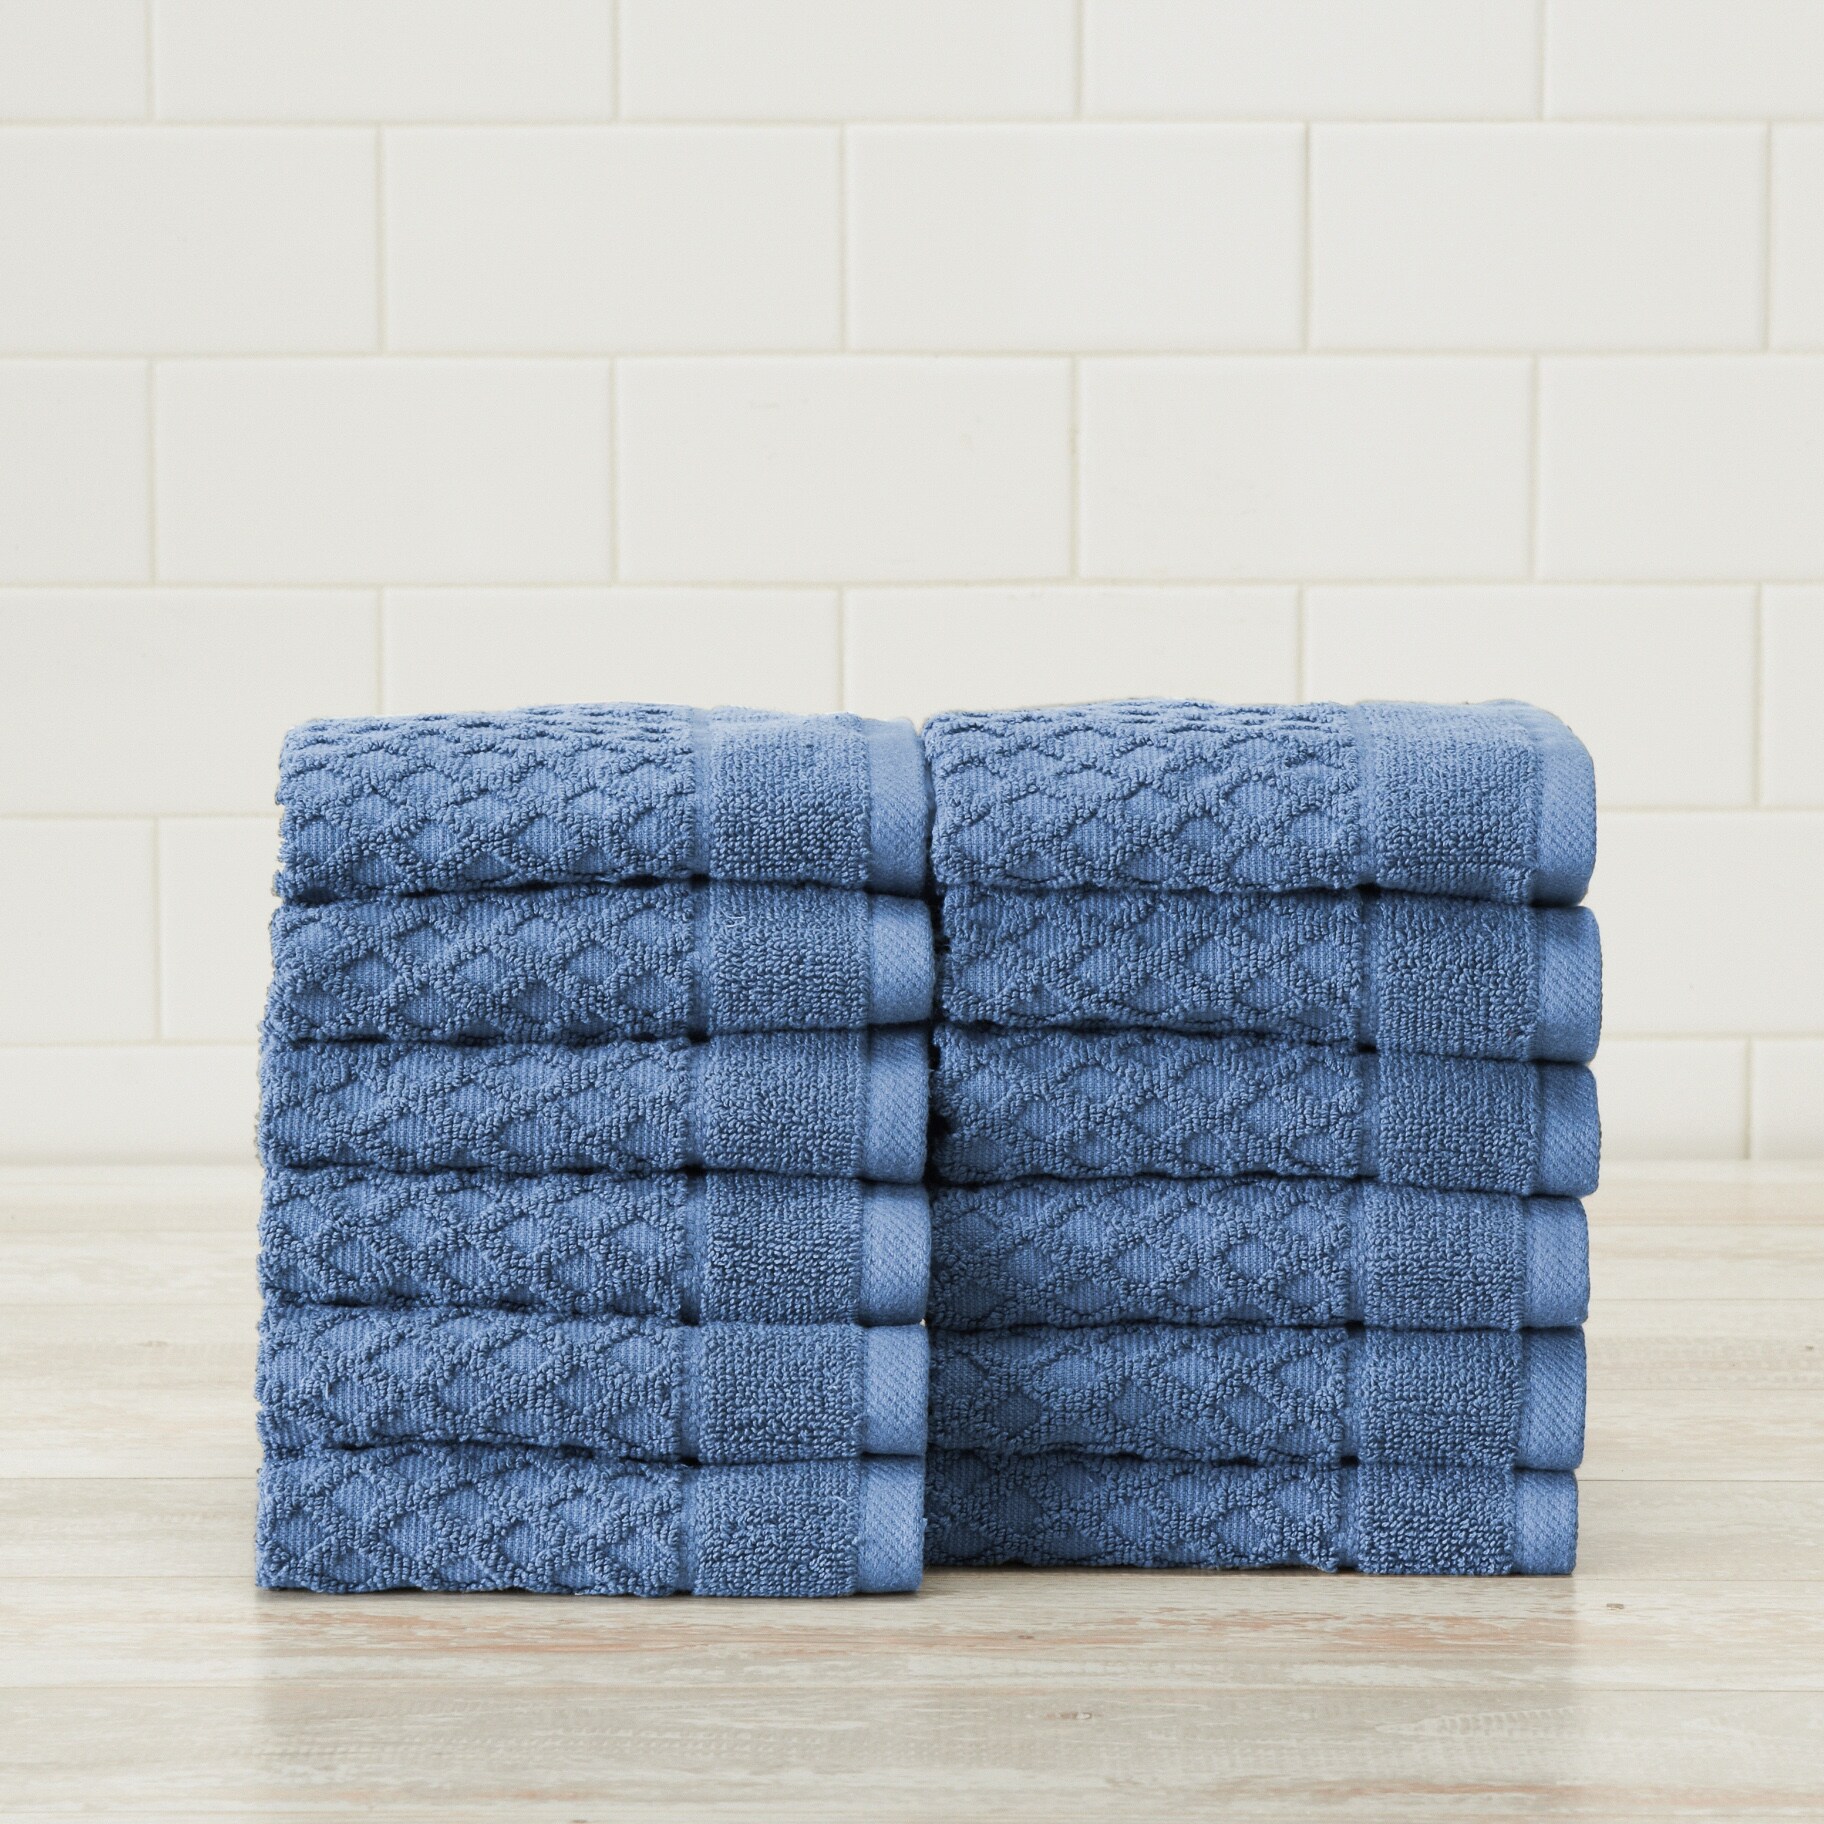 Upstate Pebble Texture Towel Set - White, Bath & Grooming